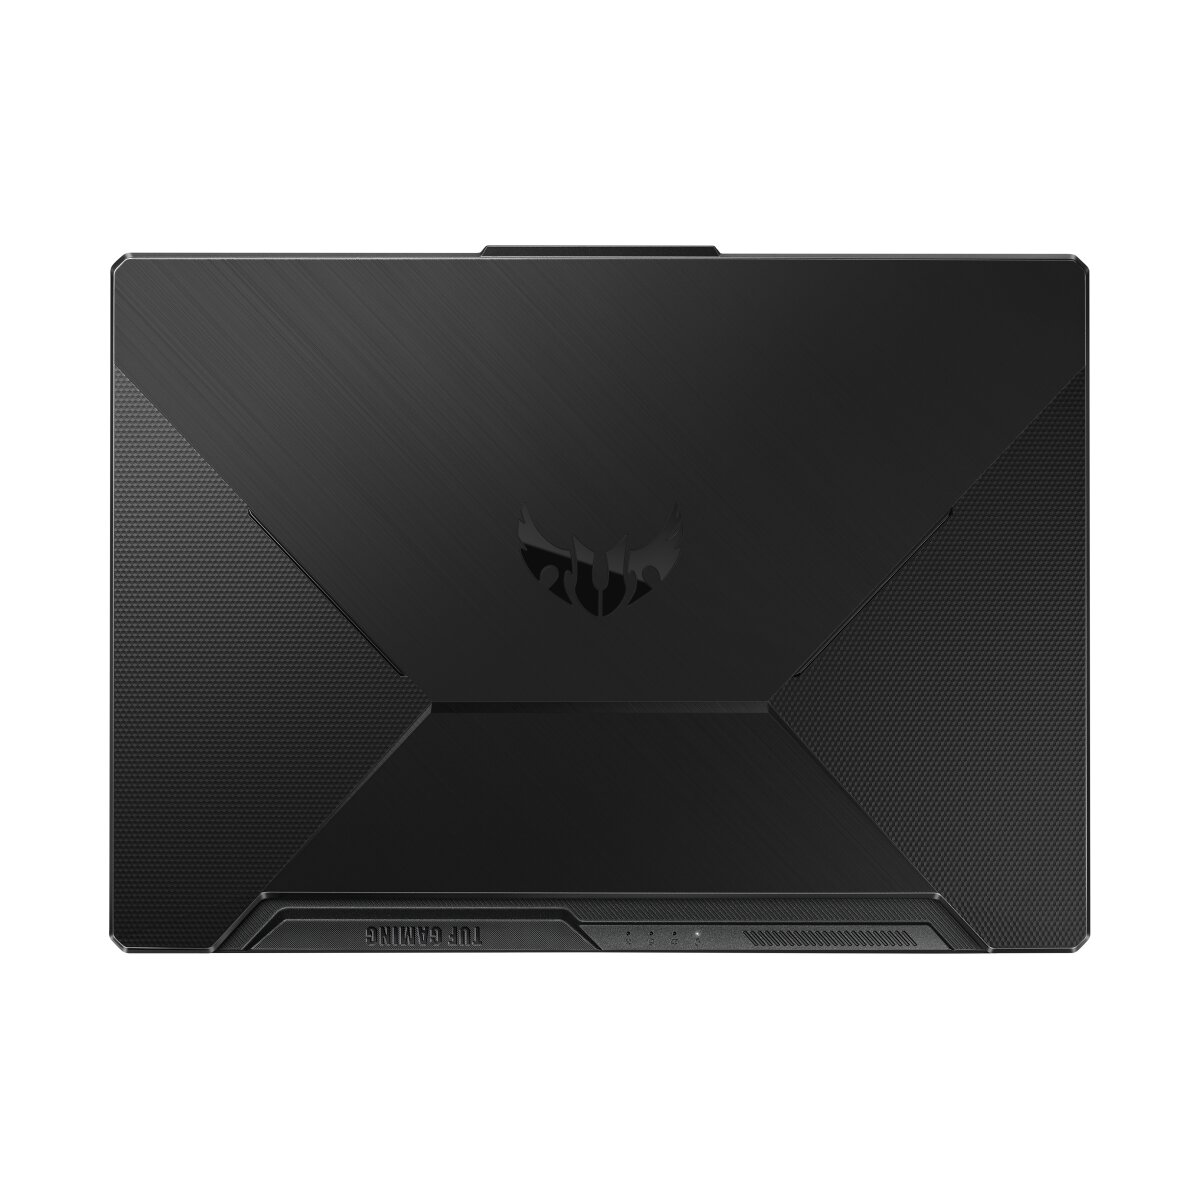 Asus Tuf Gaming Fx506lh Hn004 90nr03u2 M05150 Laptop Specifications